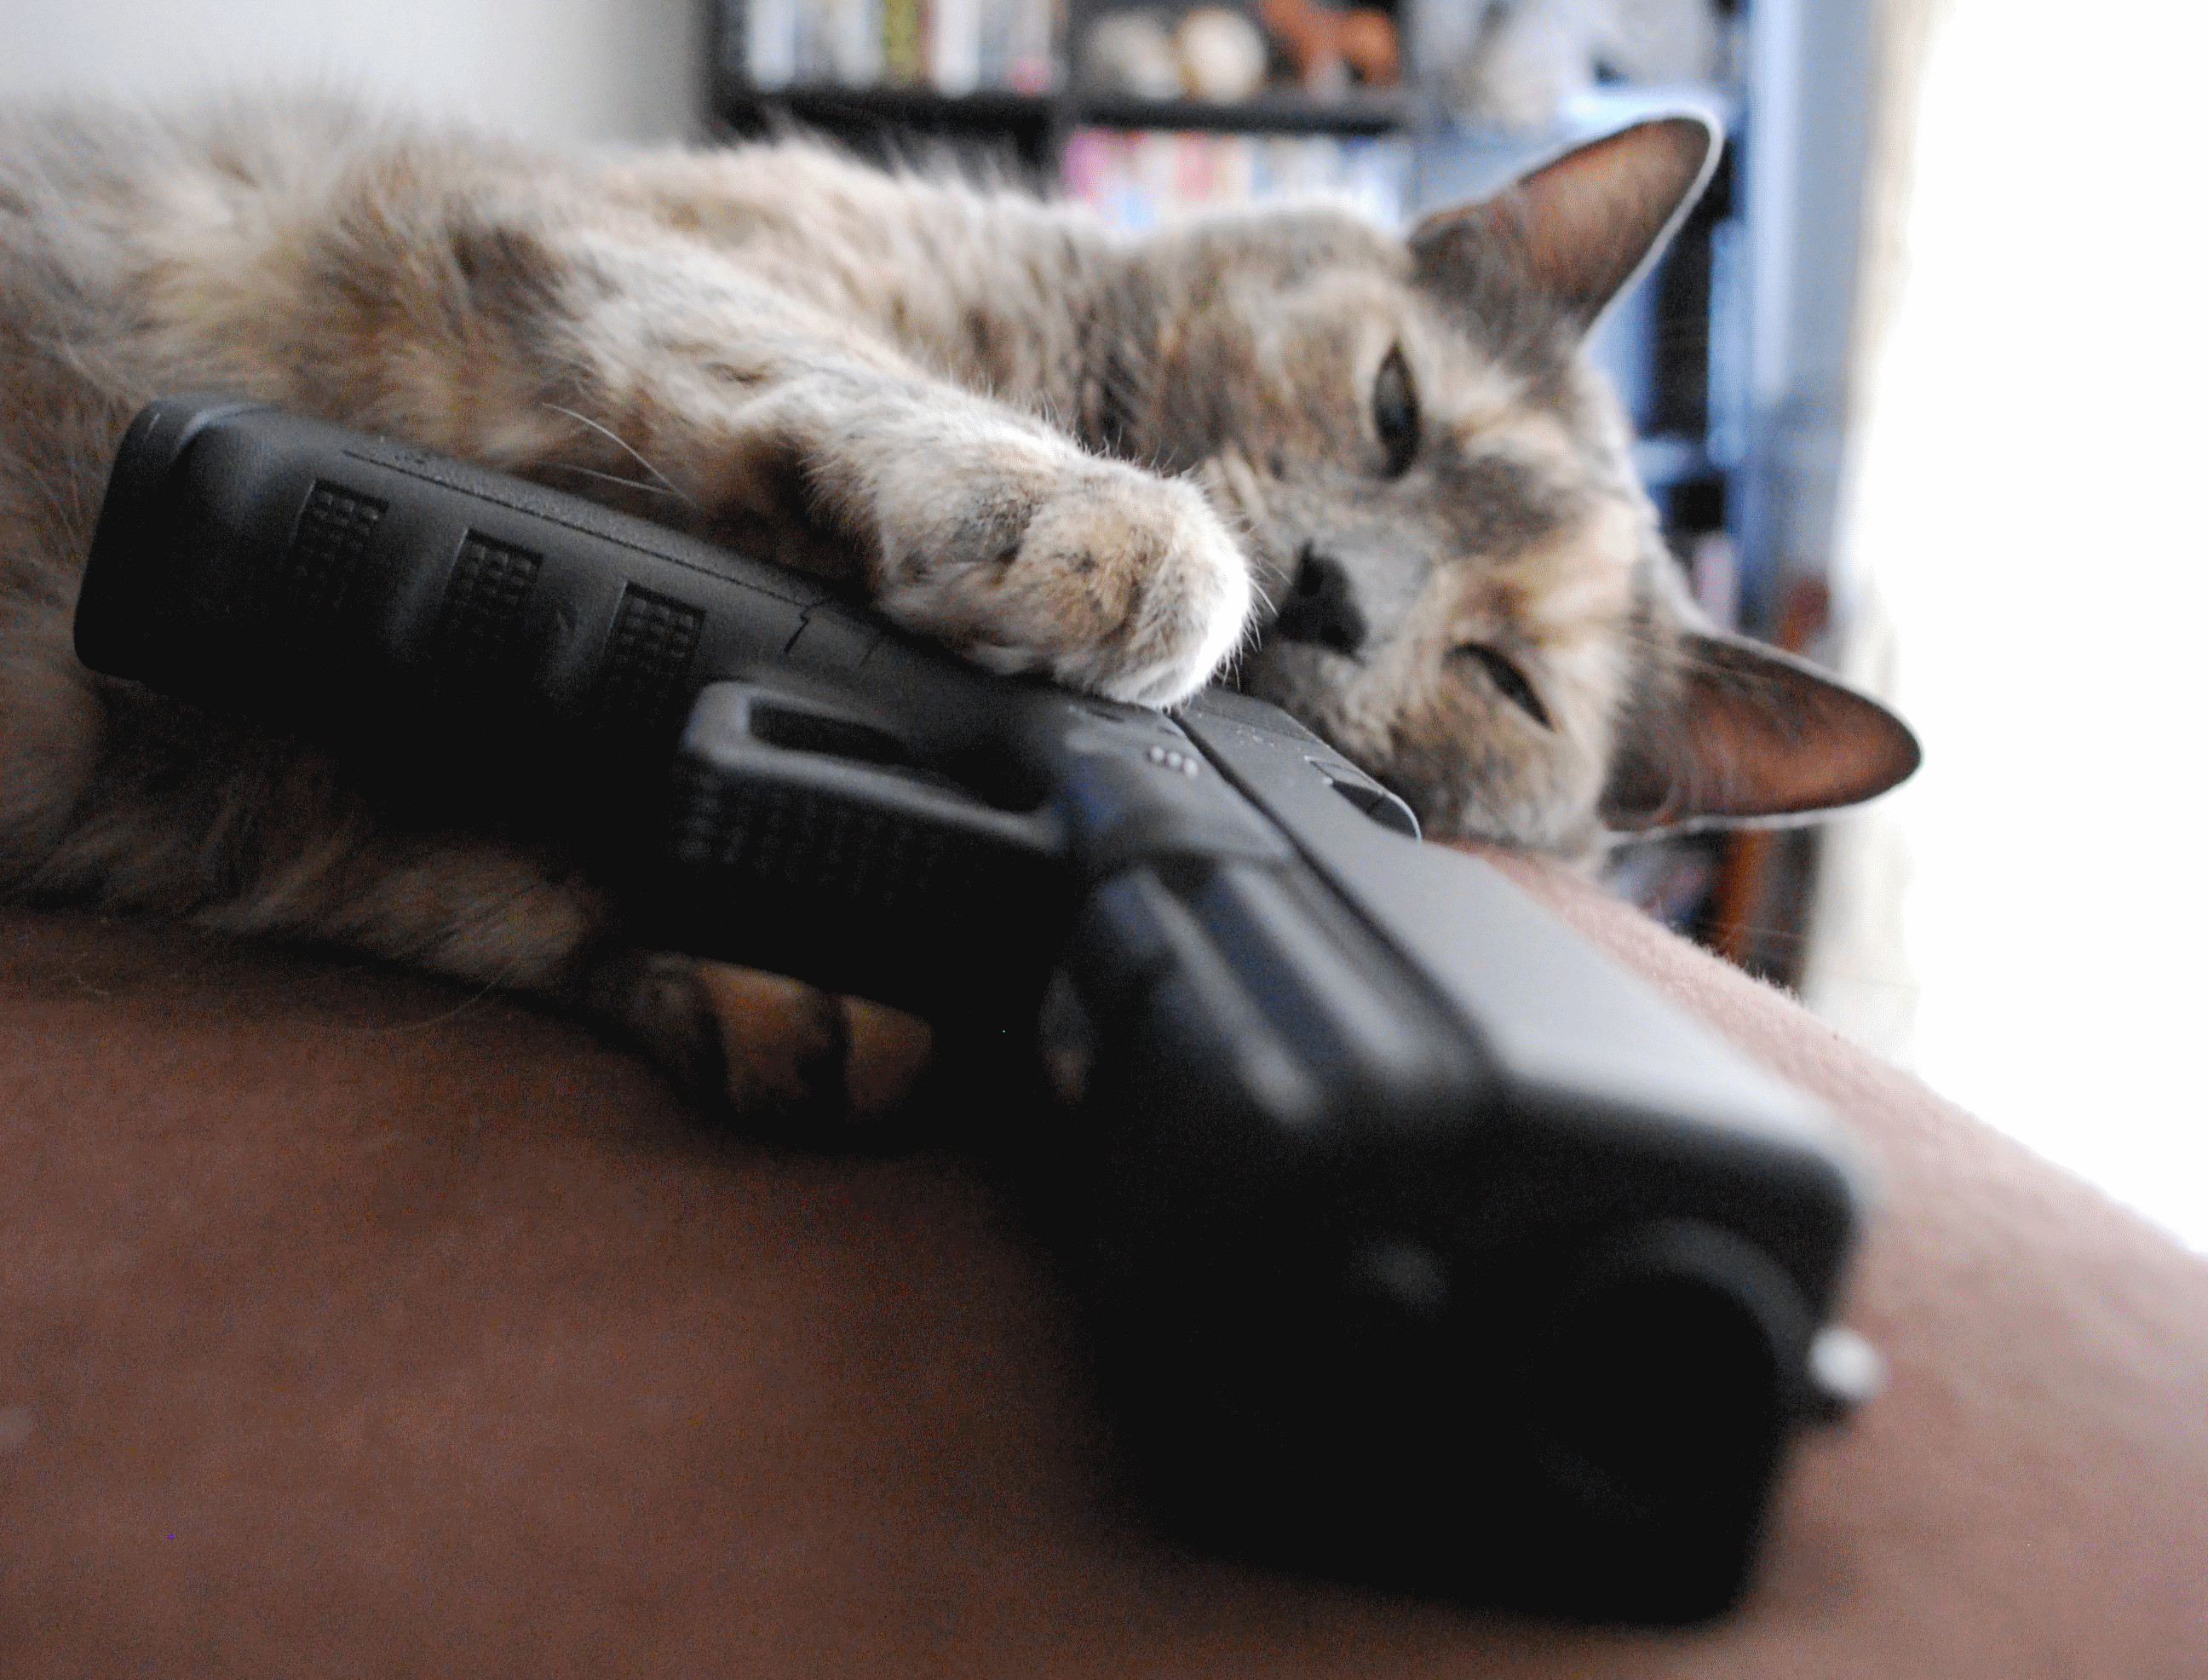 пистолеты, кошки - обои на рабочий стол